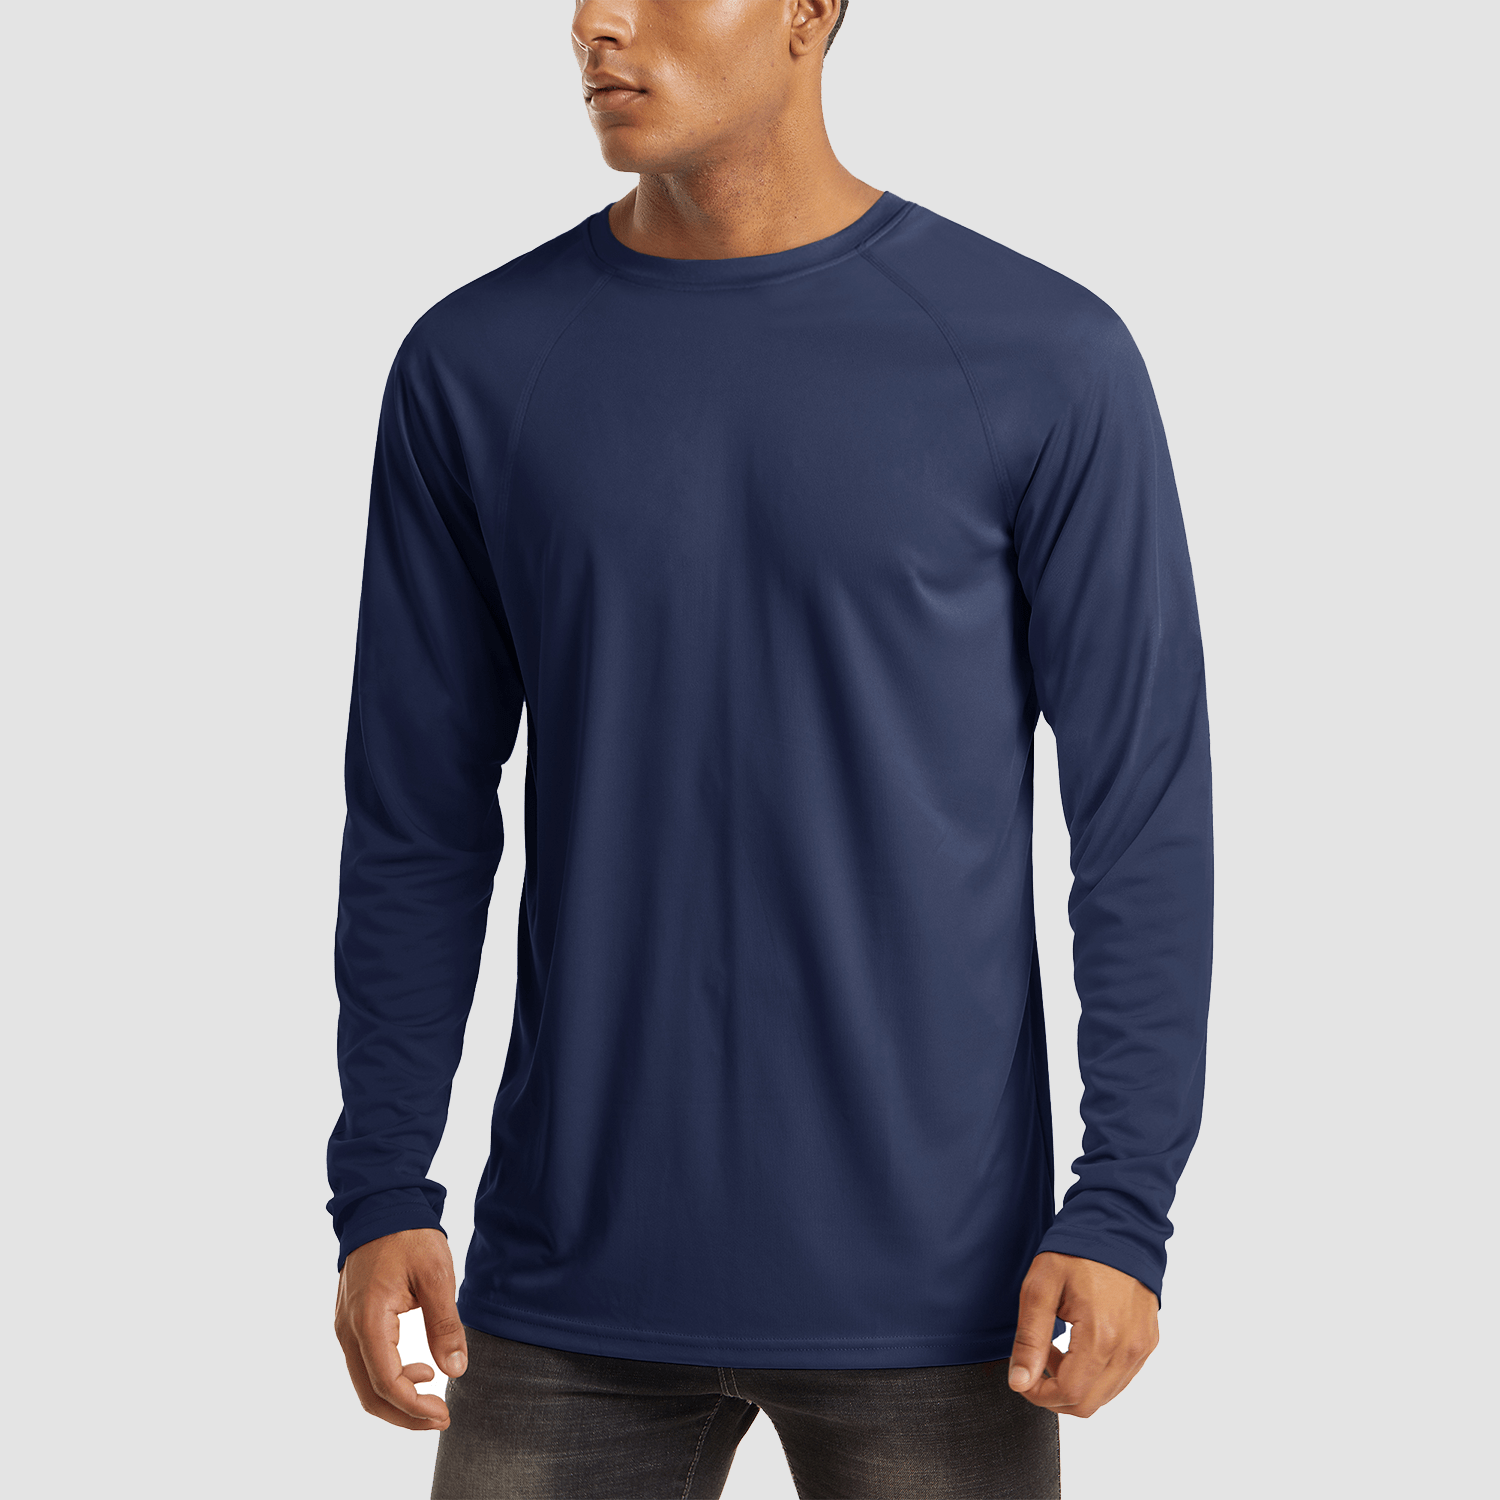 【Buy 4 Get 4th Free】Men's Long Sleeve Hooded Shirt UPF 50+ Athletic Shirt, Blue Grey / XXL